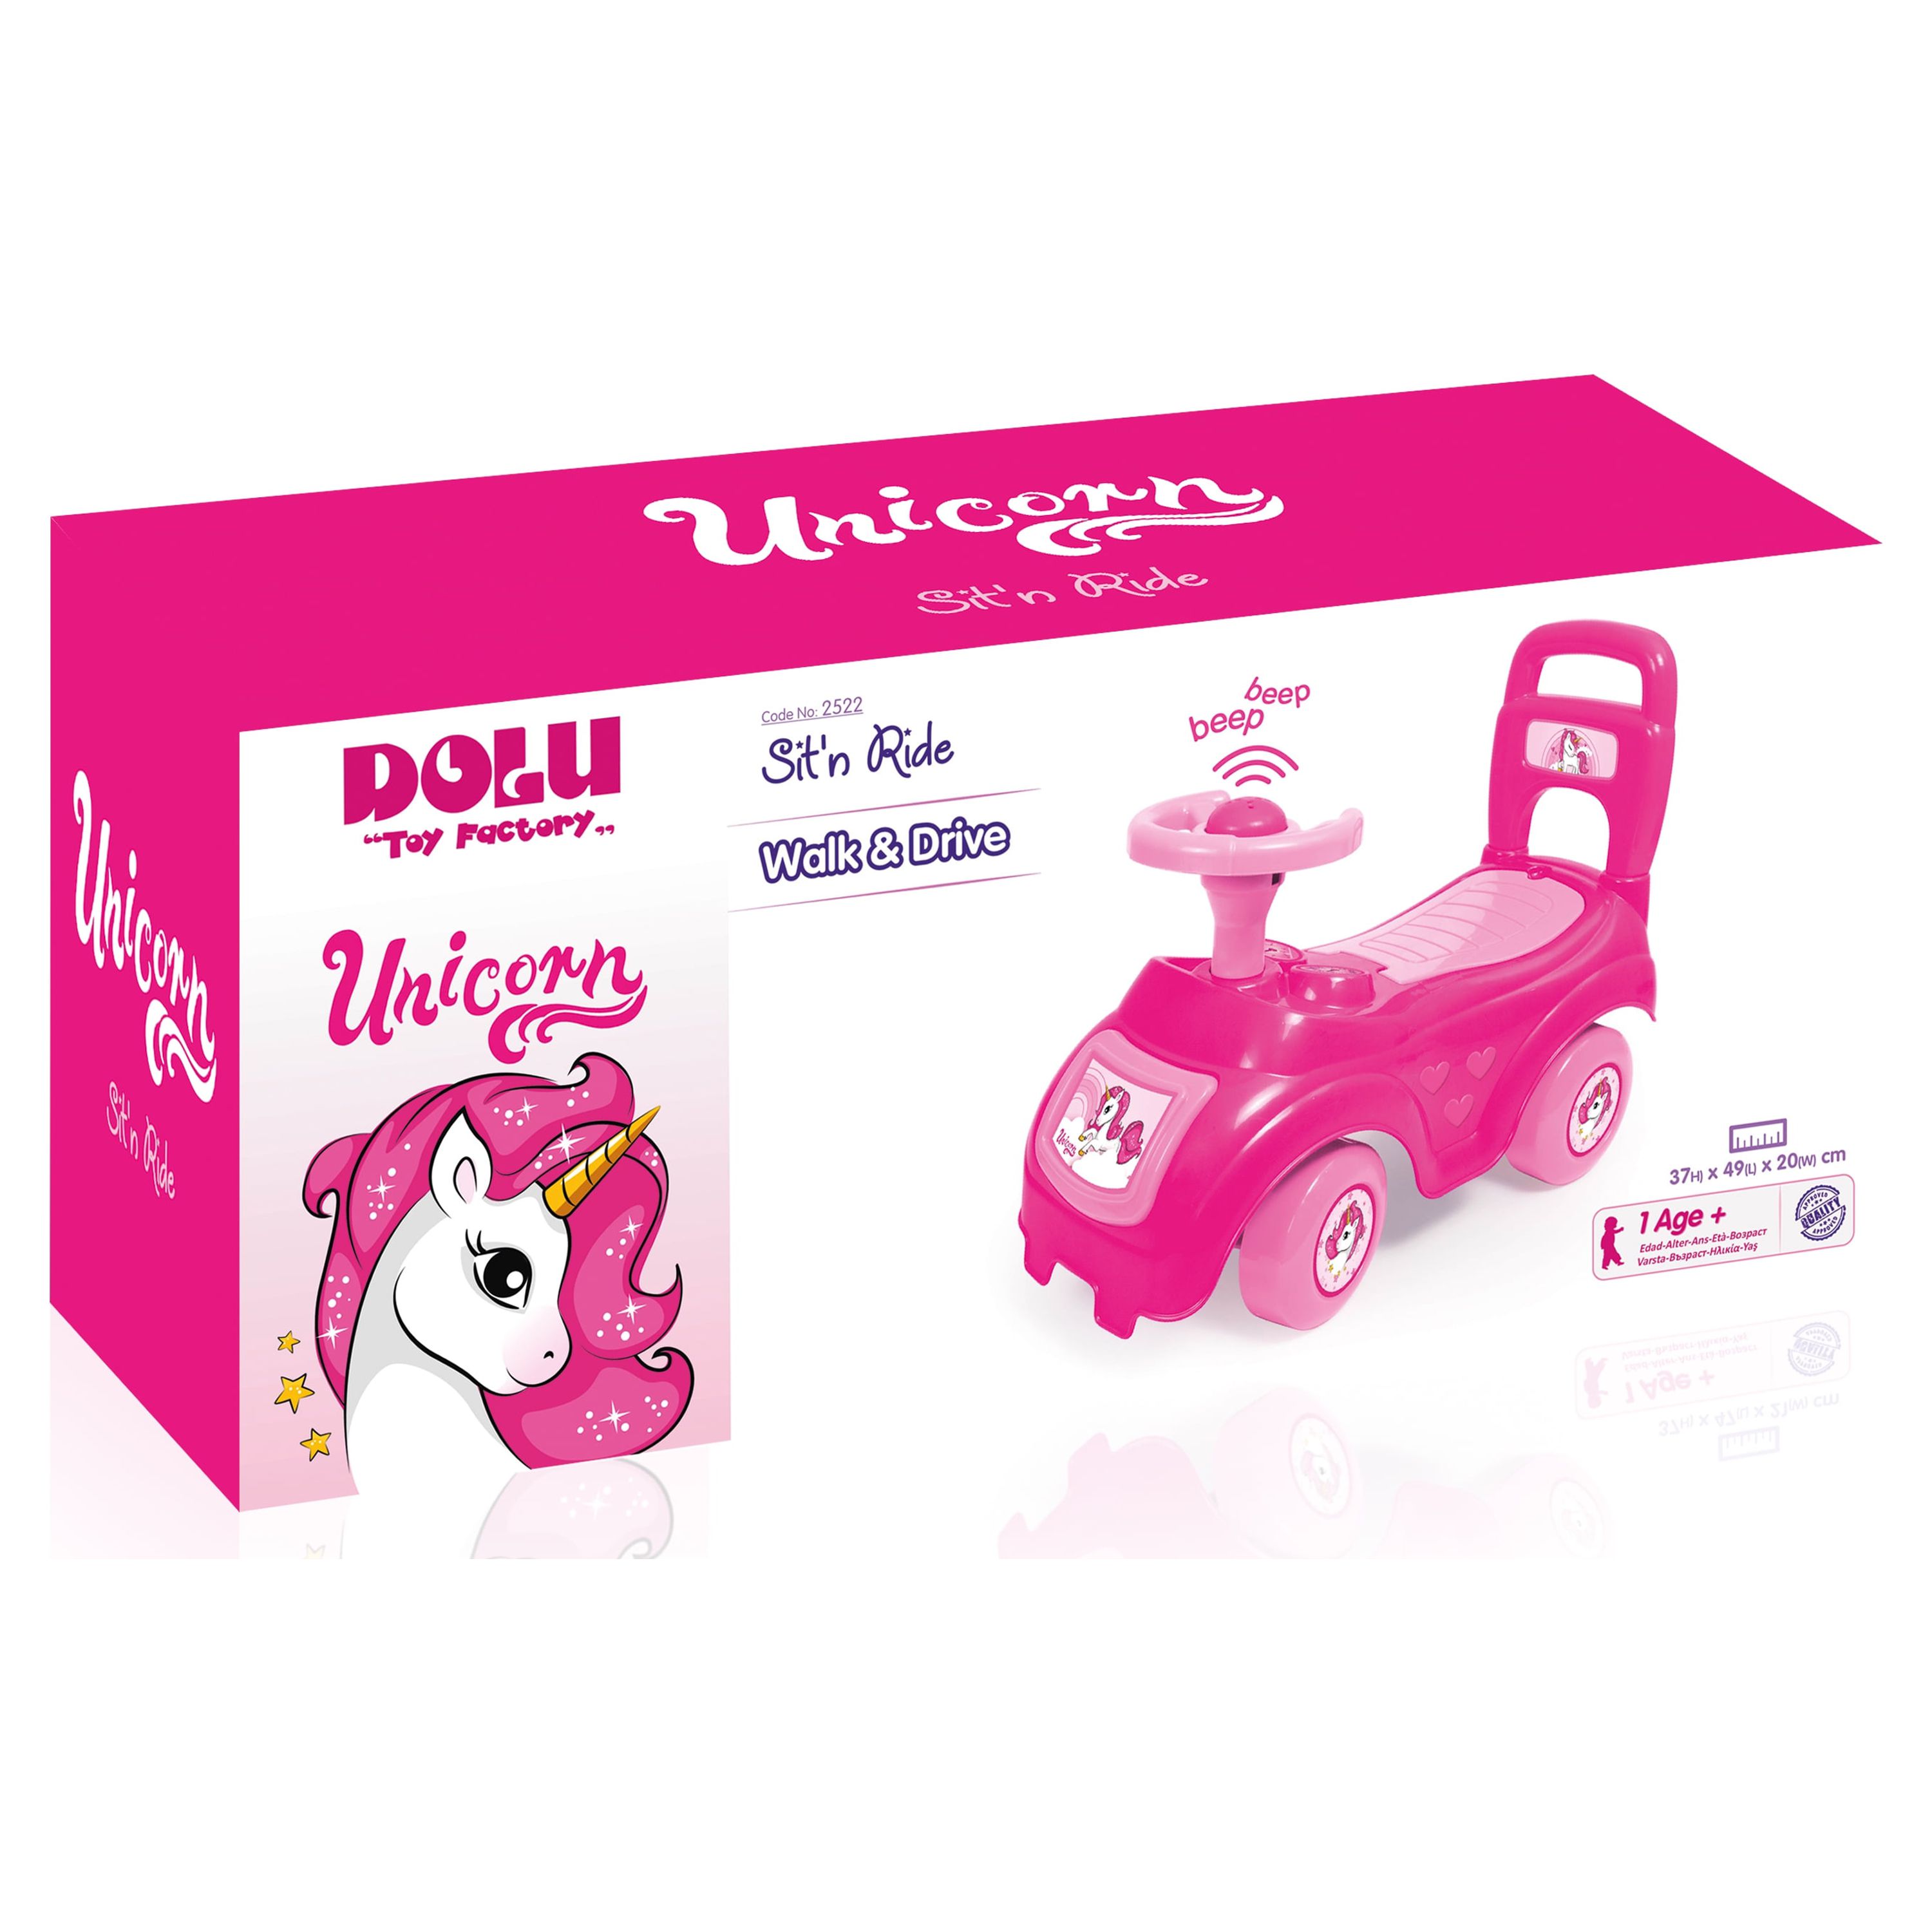 Dolu Toys - Push & Pedal Ride-on's Pink Unicorn Sit and Ride unisex - image 3 of 4